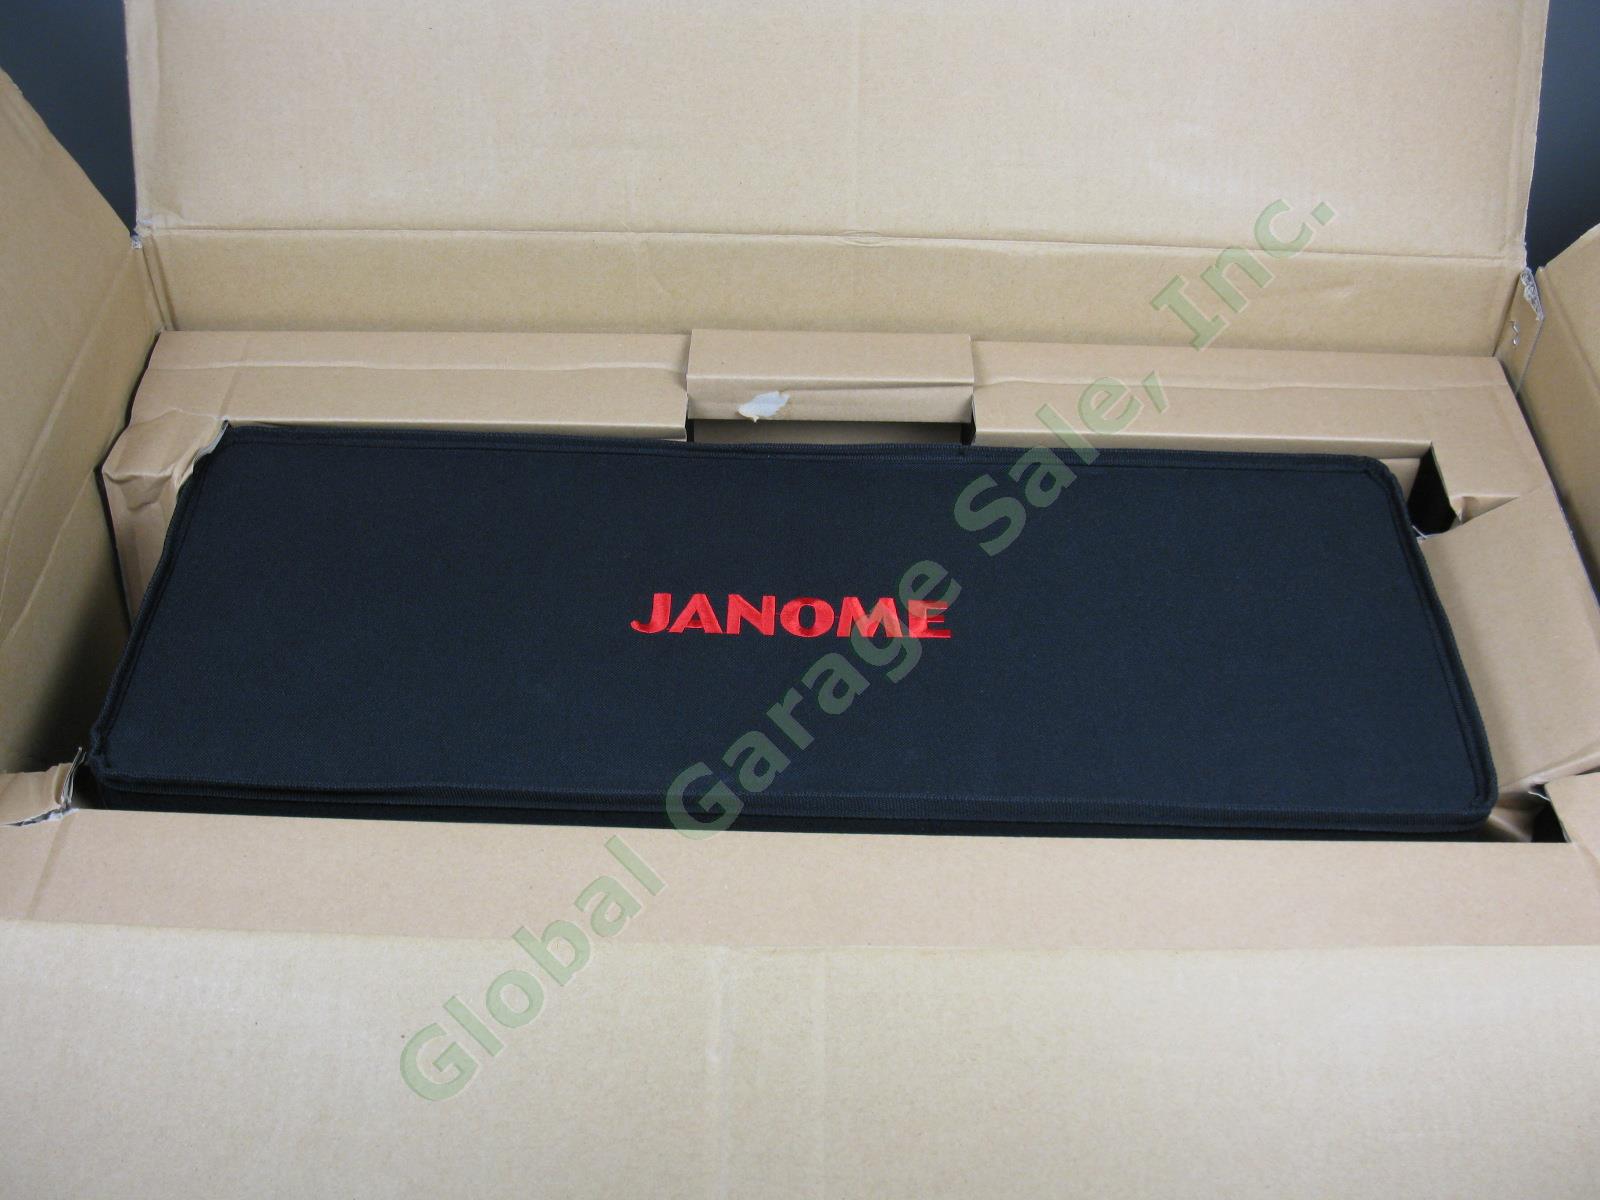 Janome Horizon Memory Craft MC 15000 Sewing Embroidery Machine 2 HOURS! Vers 3.0 20